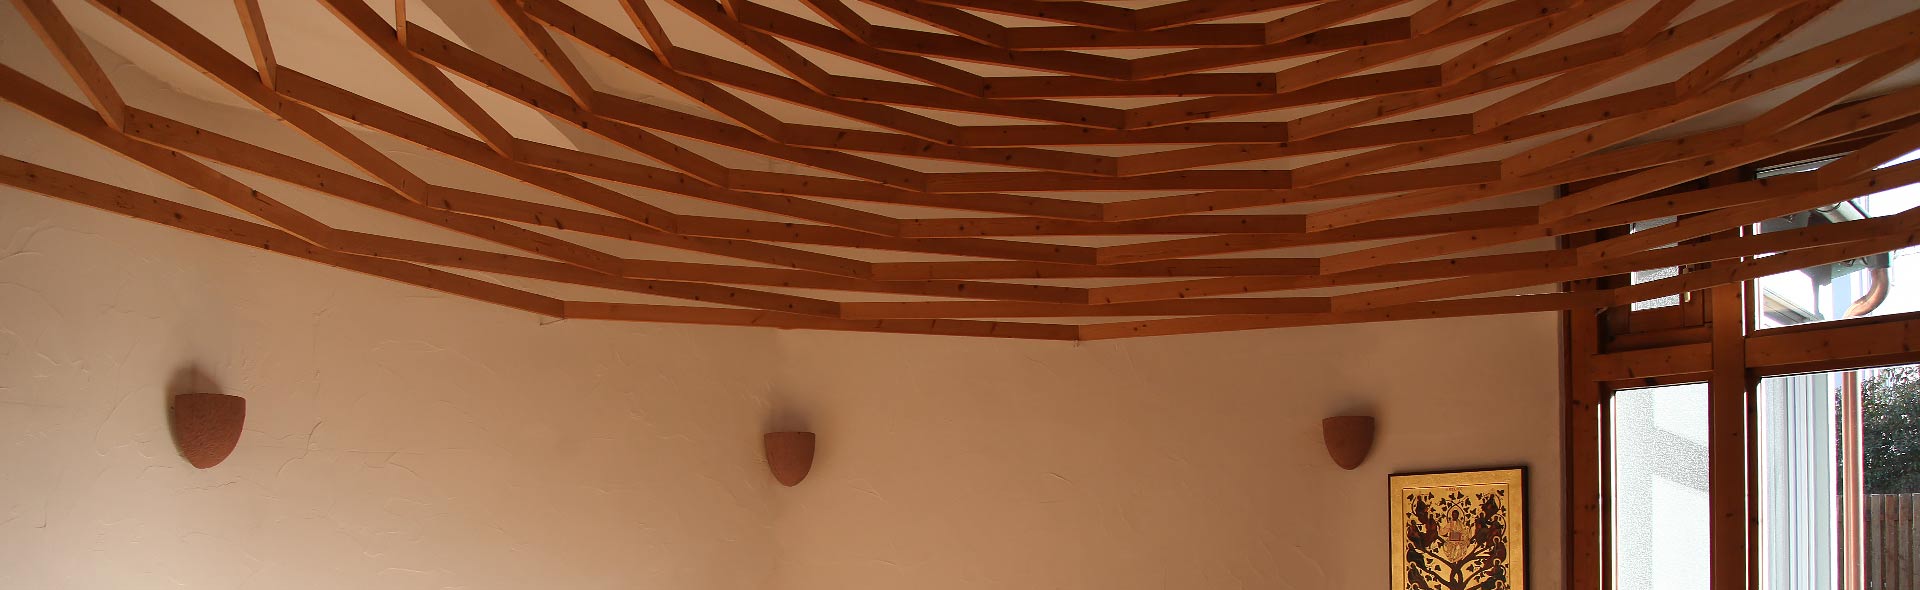 OJC Begegnen – Heller Kapelleraum, mit schöner Holz-Verstrebung an der Decke.